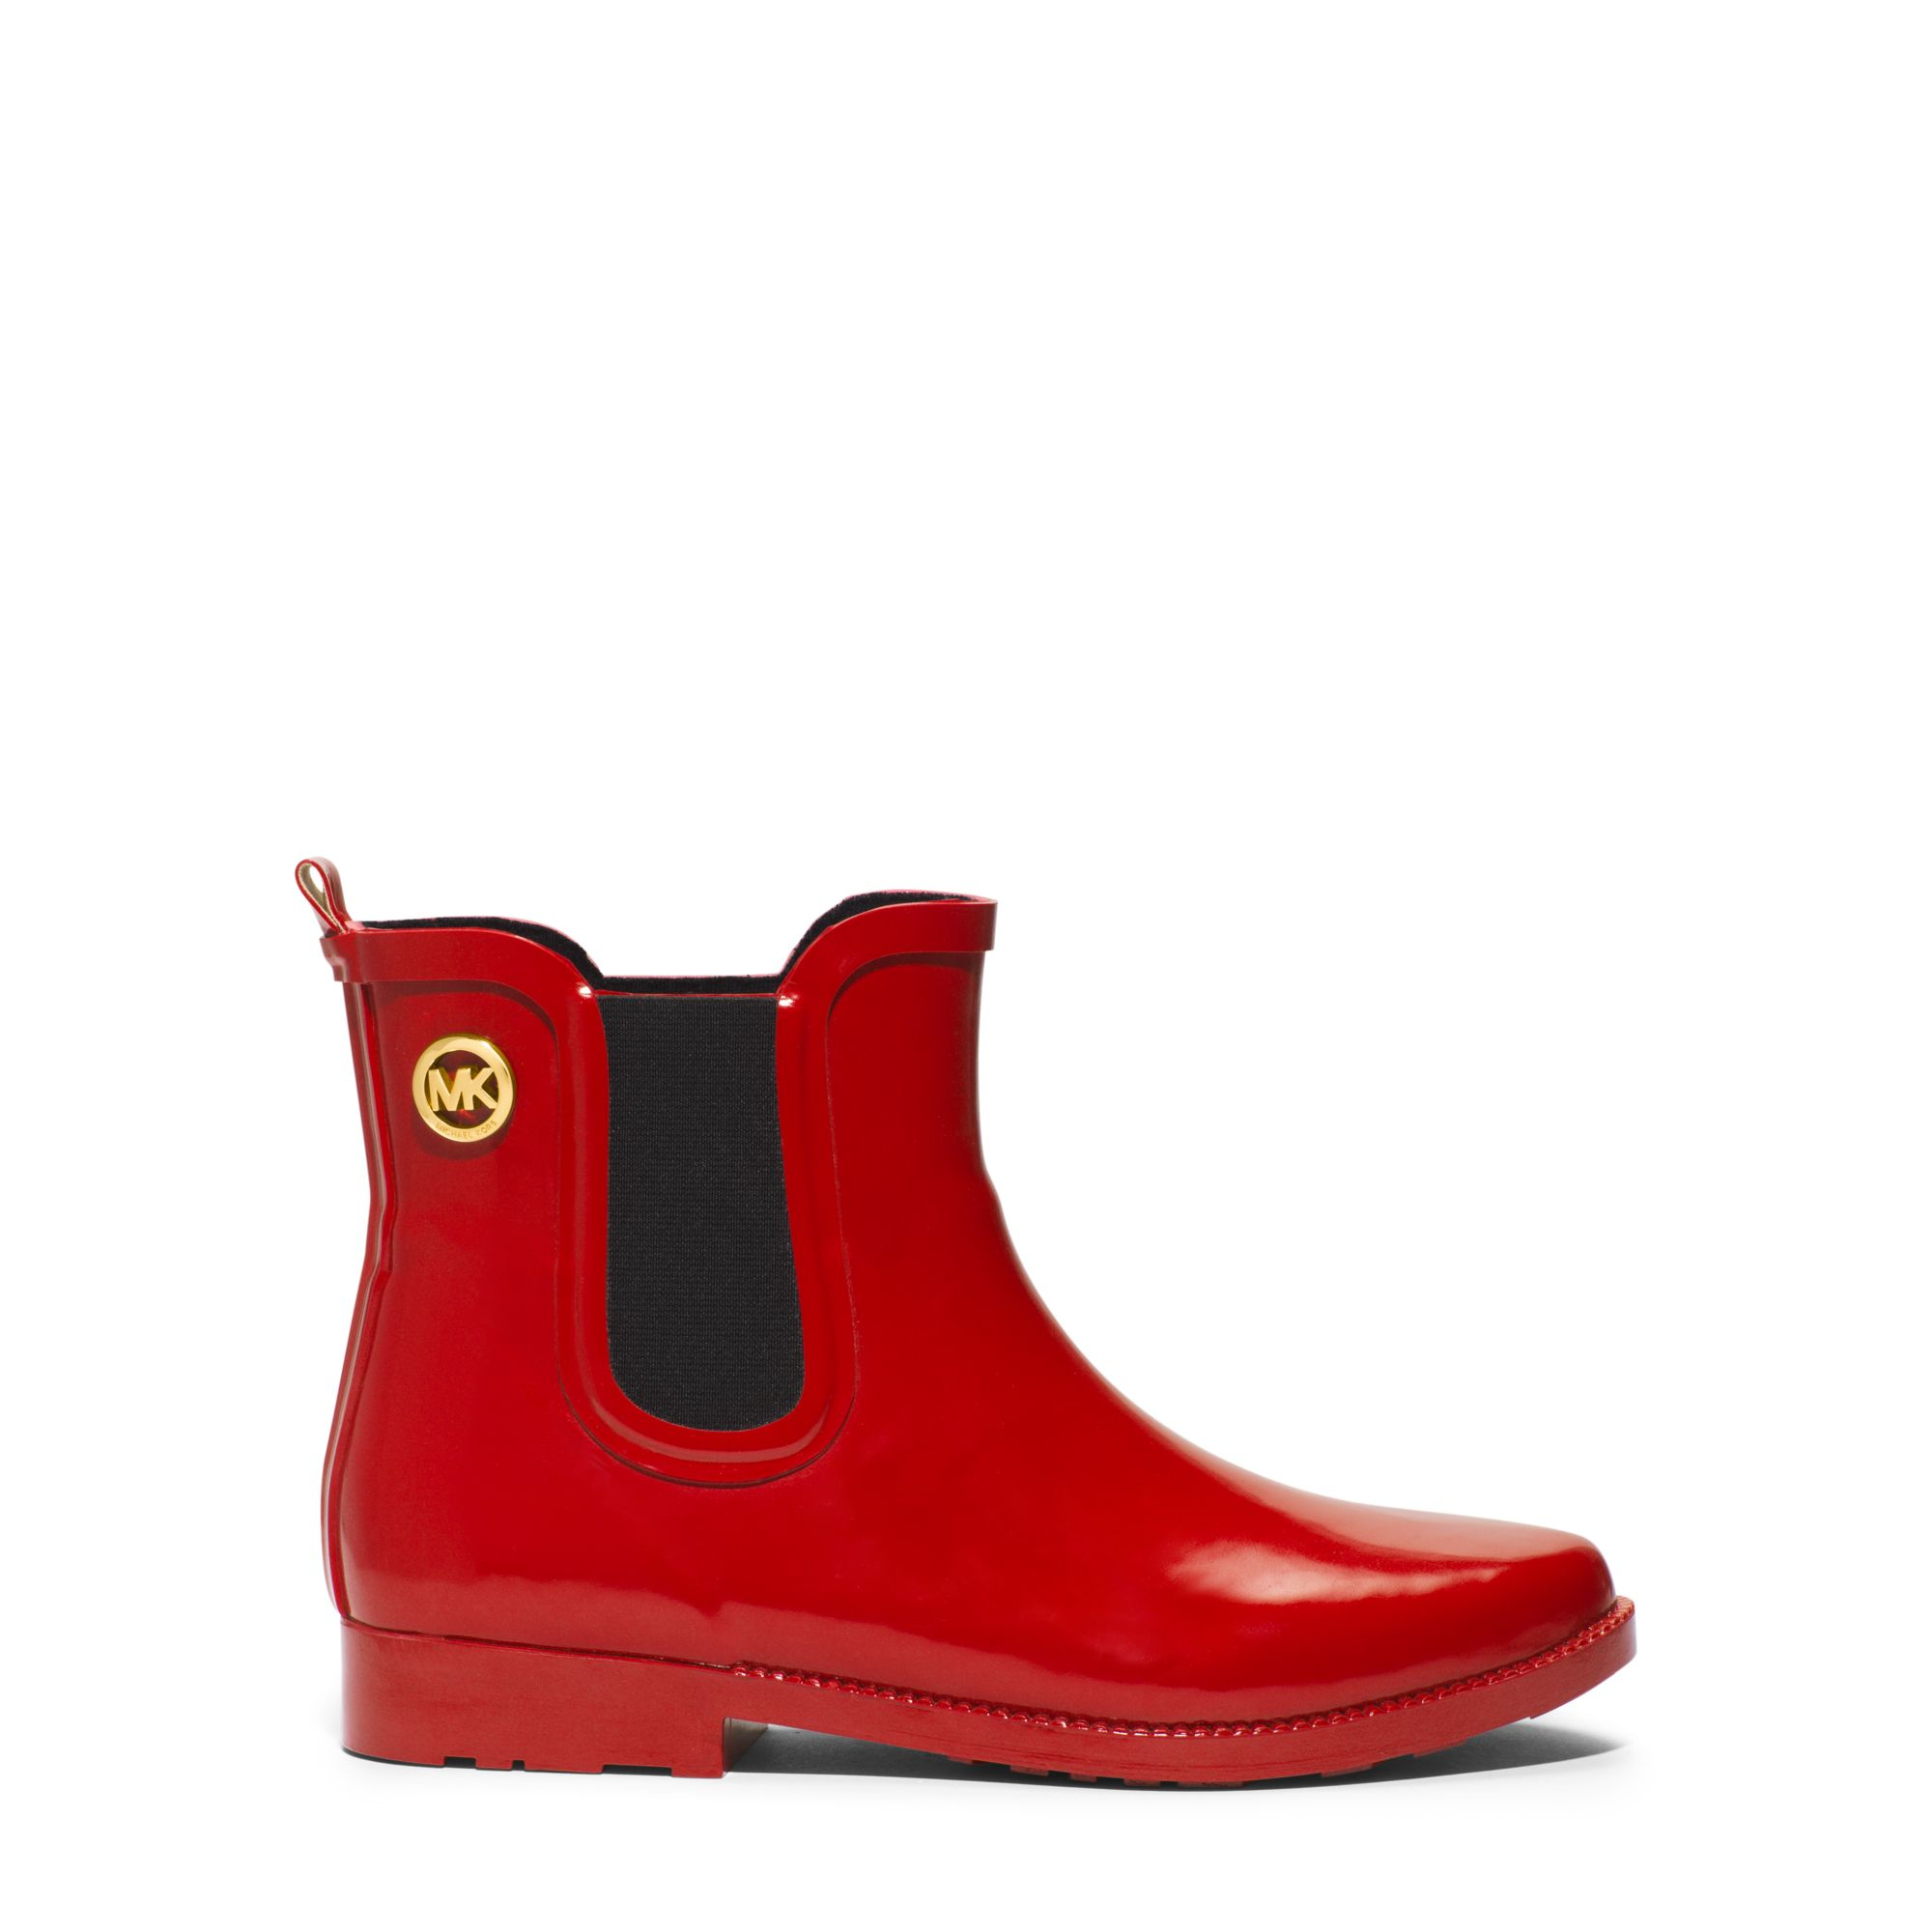 michael kors rain boots red